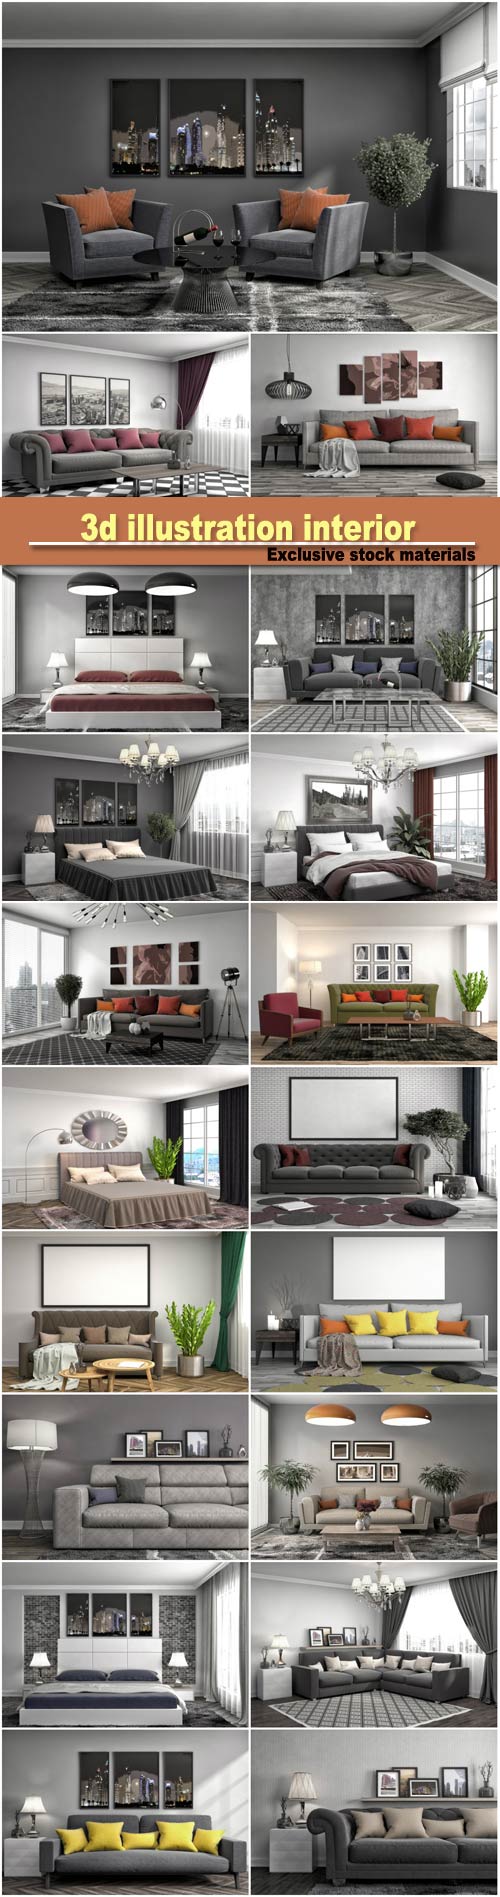 3d illustration bedroom interior, interior with sofa